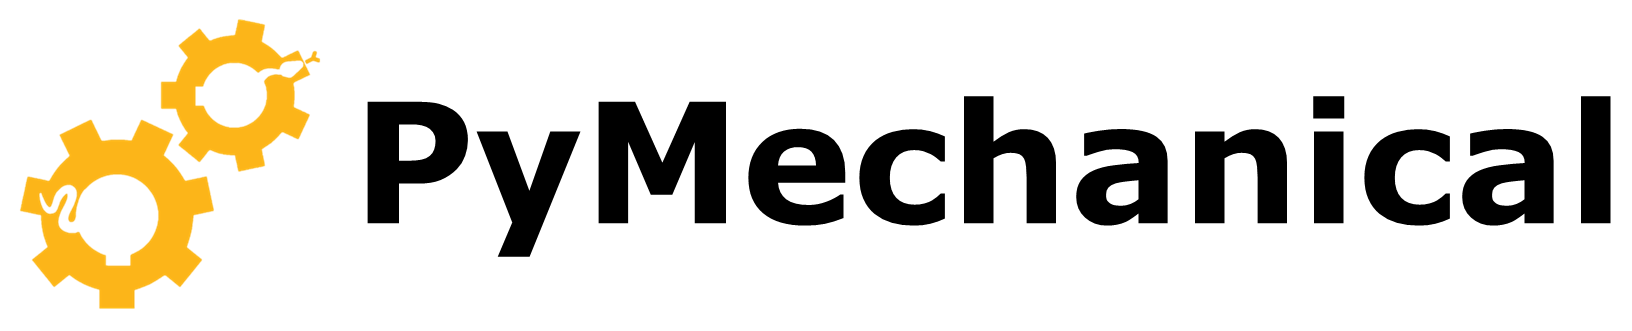 PyMechanical logo